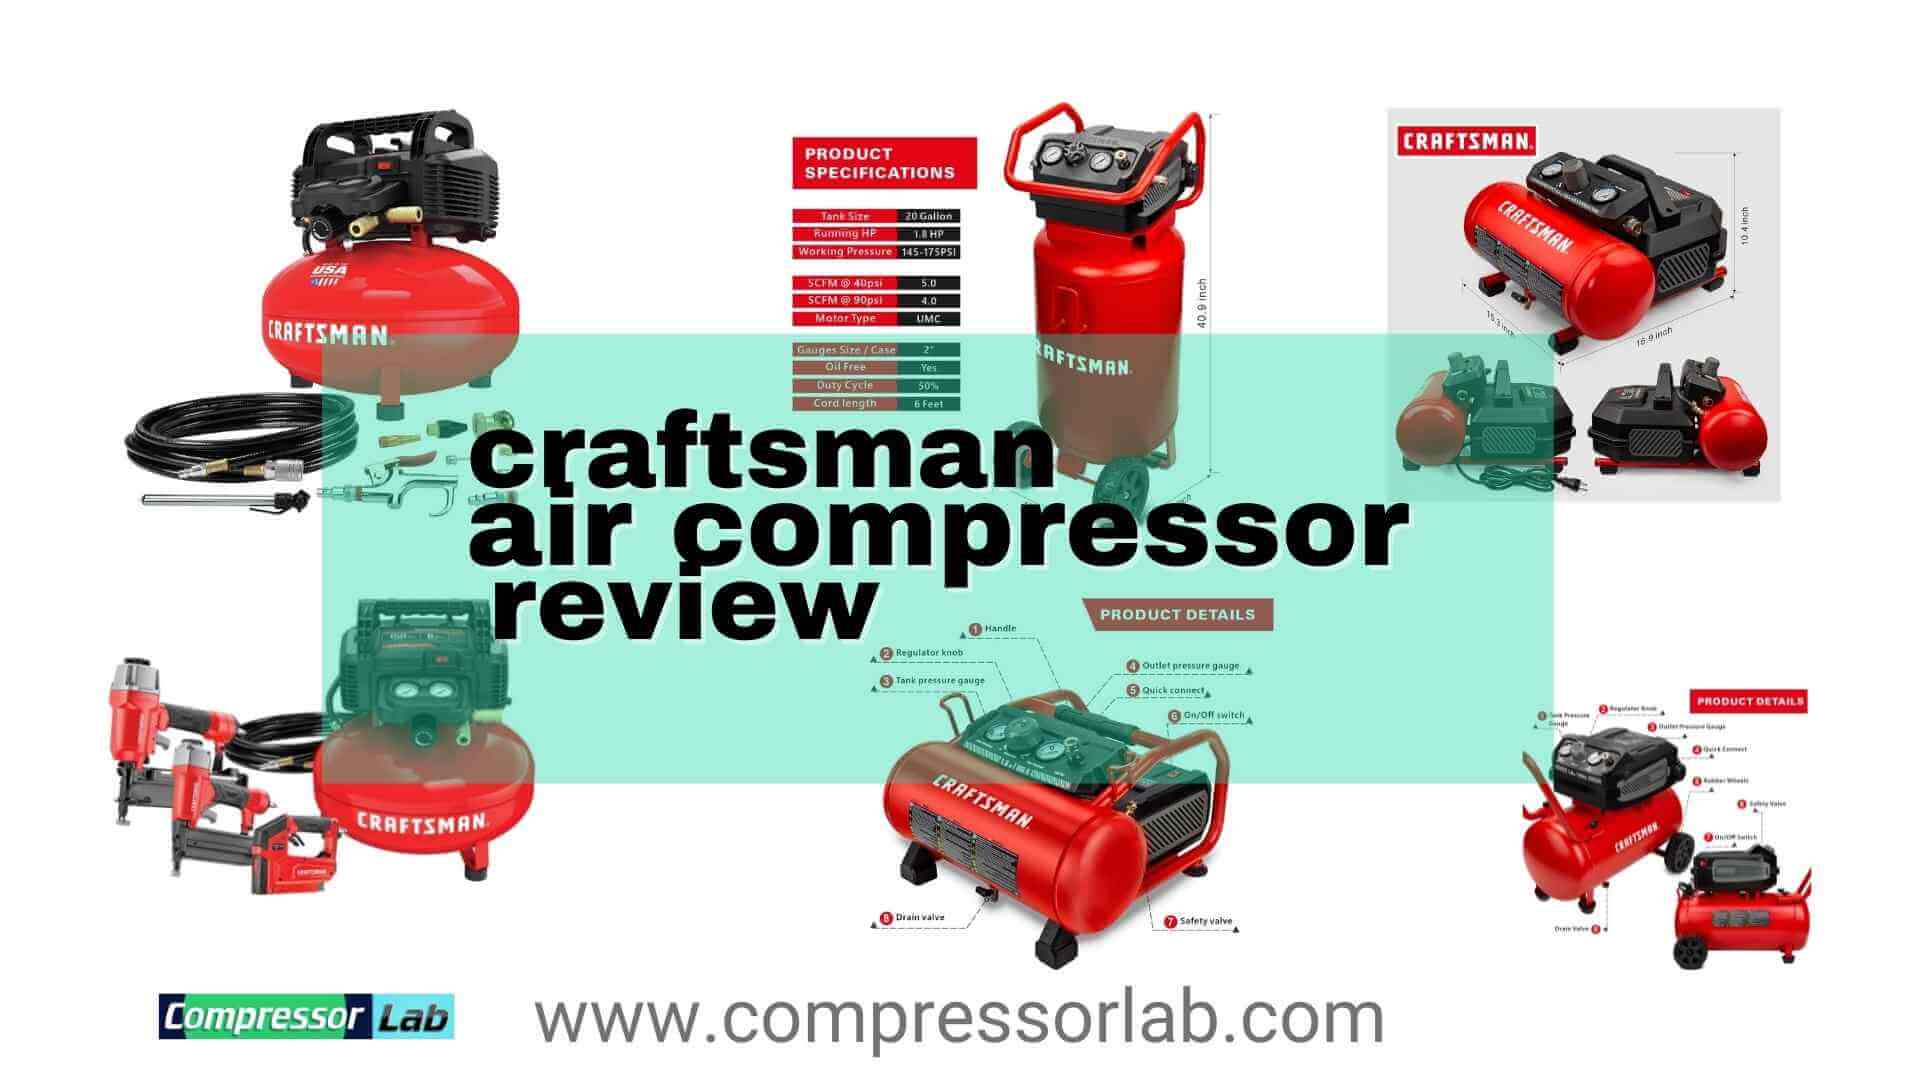 Craftsman air compressor review